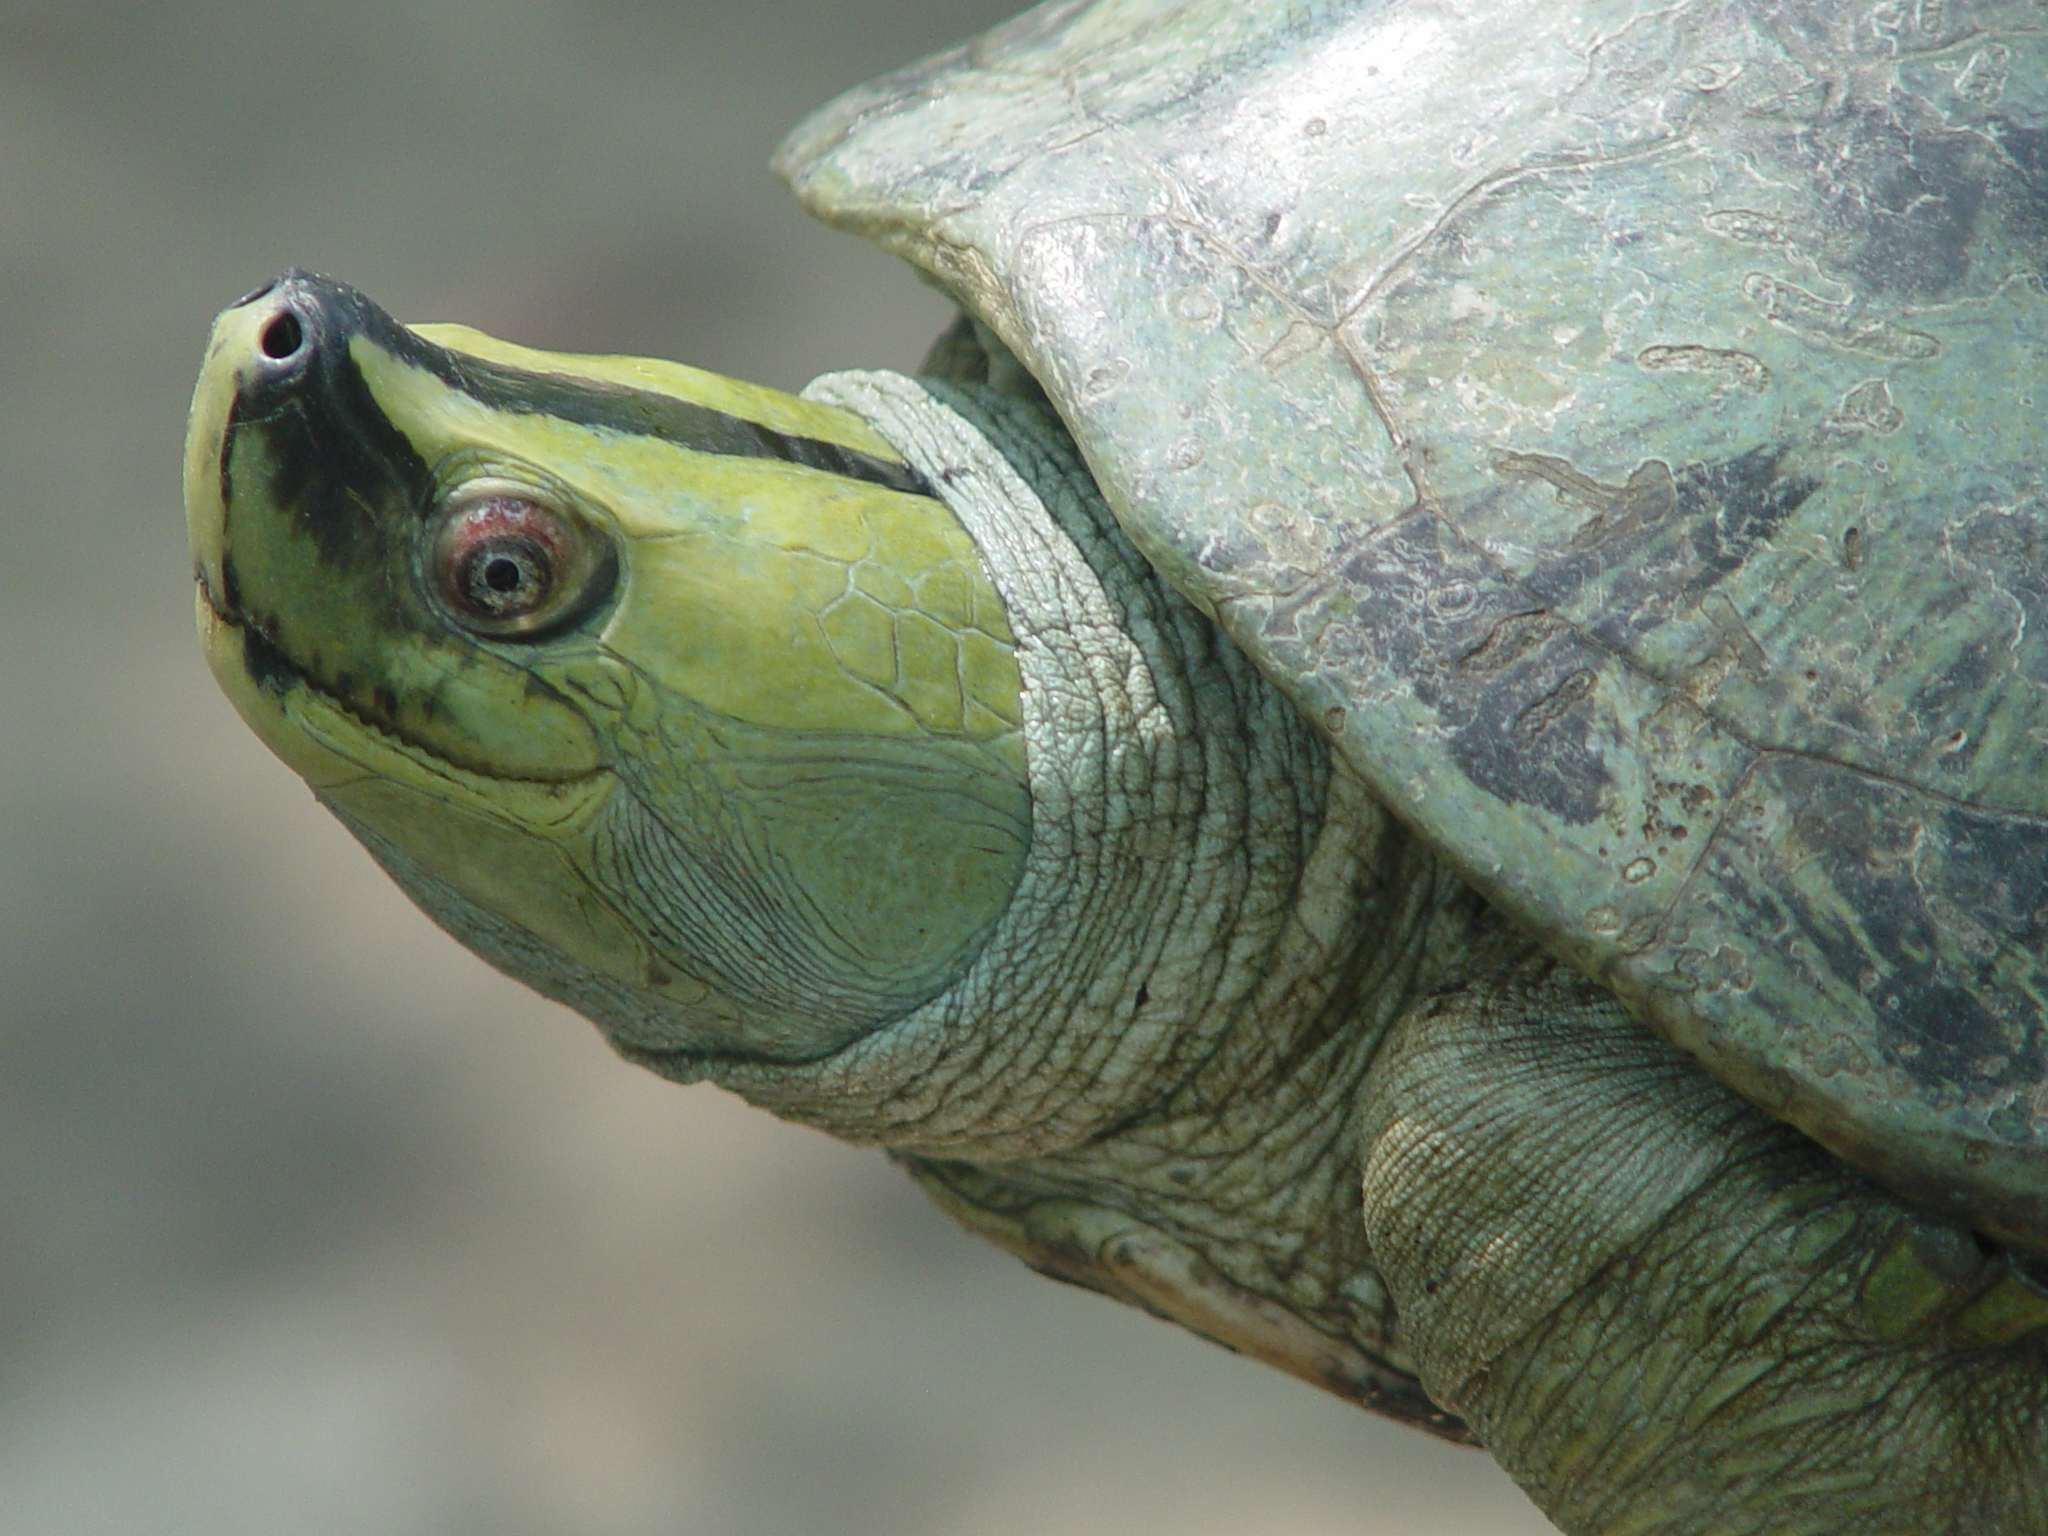 Rare turtle, thought extinct, reintroduced into wild - CBS News2048 x 1536